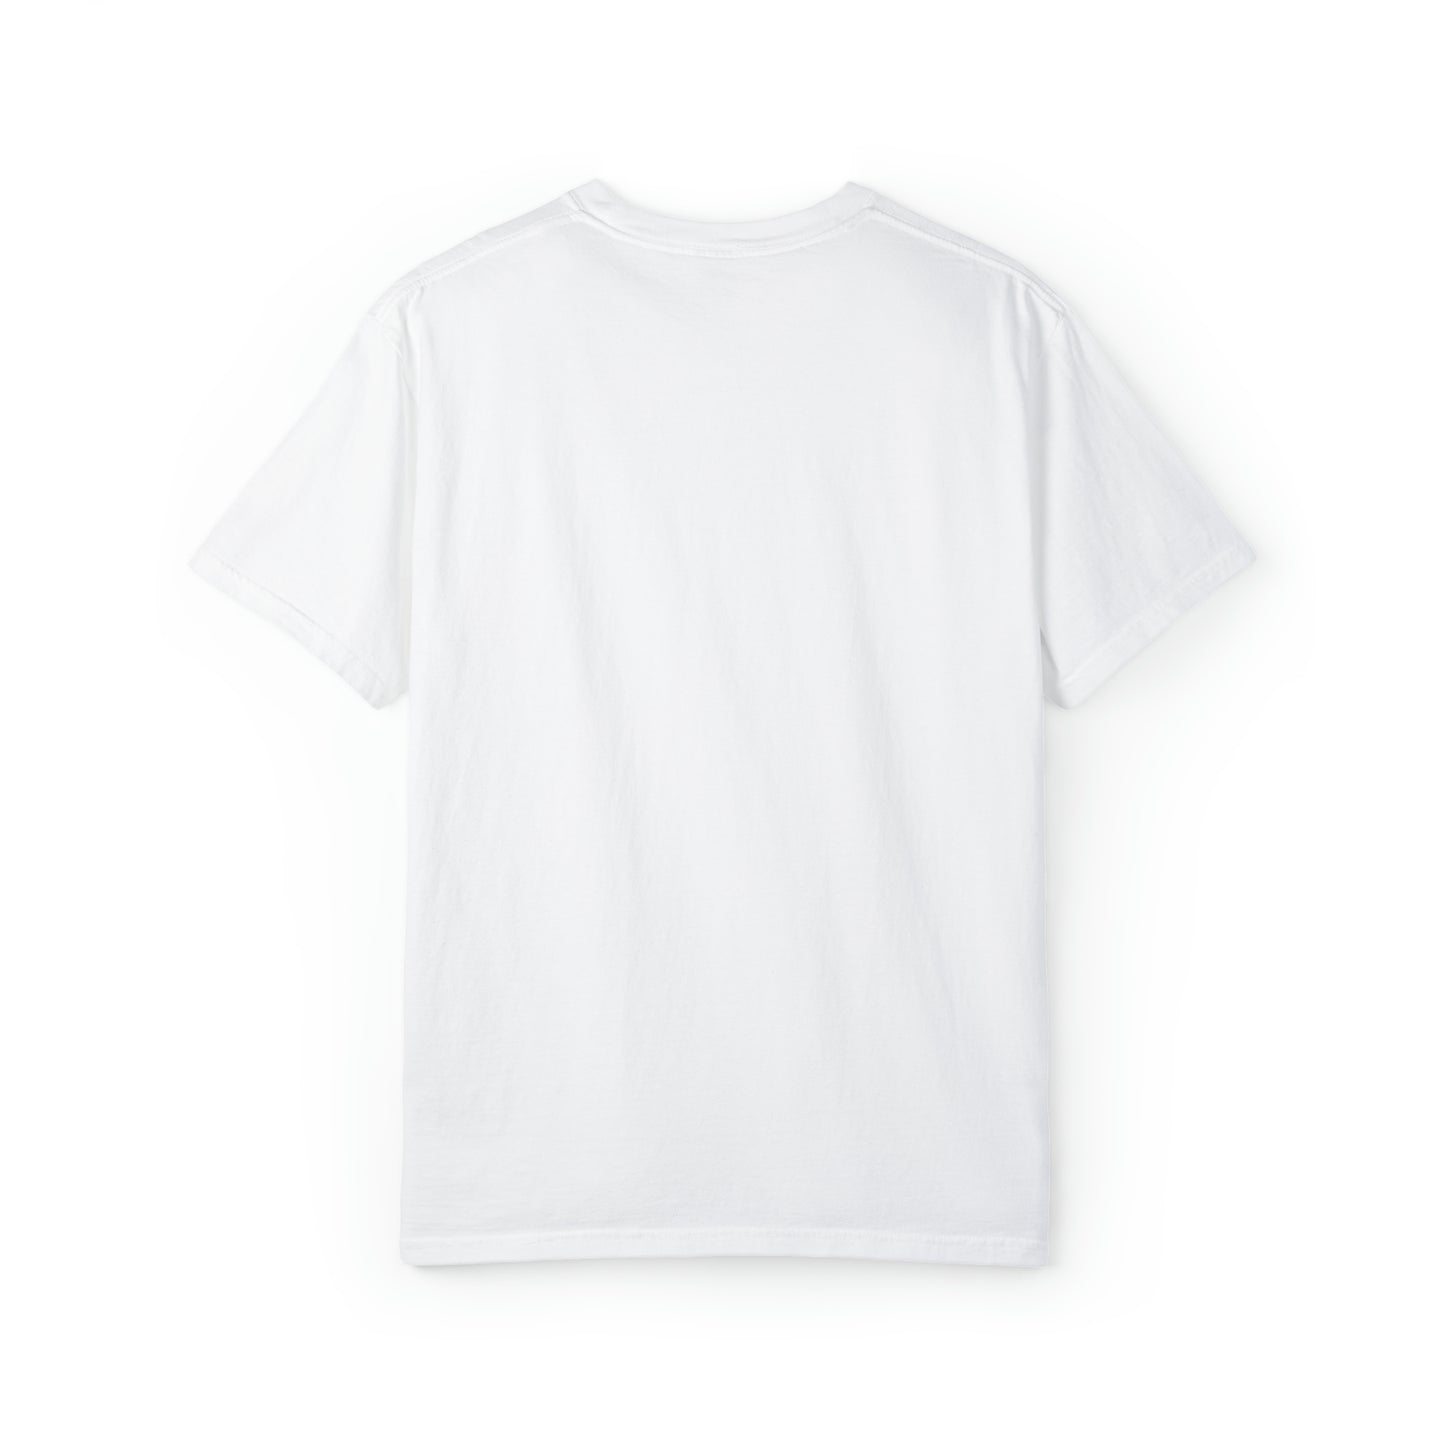 Jackal Marvel - Peter Parker Is Dead. Bootleg! (Pls!) - Unisex Garment-Dyed T-shirt